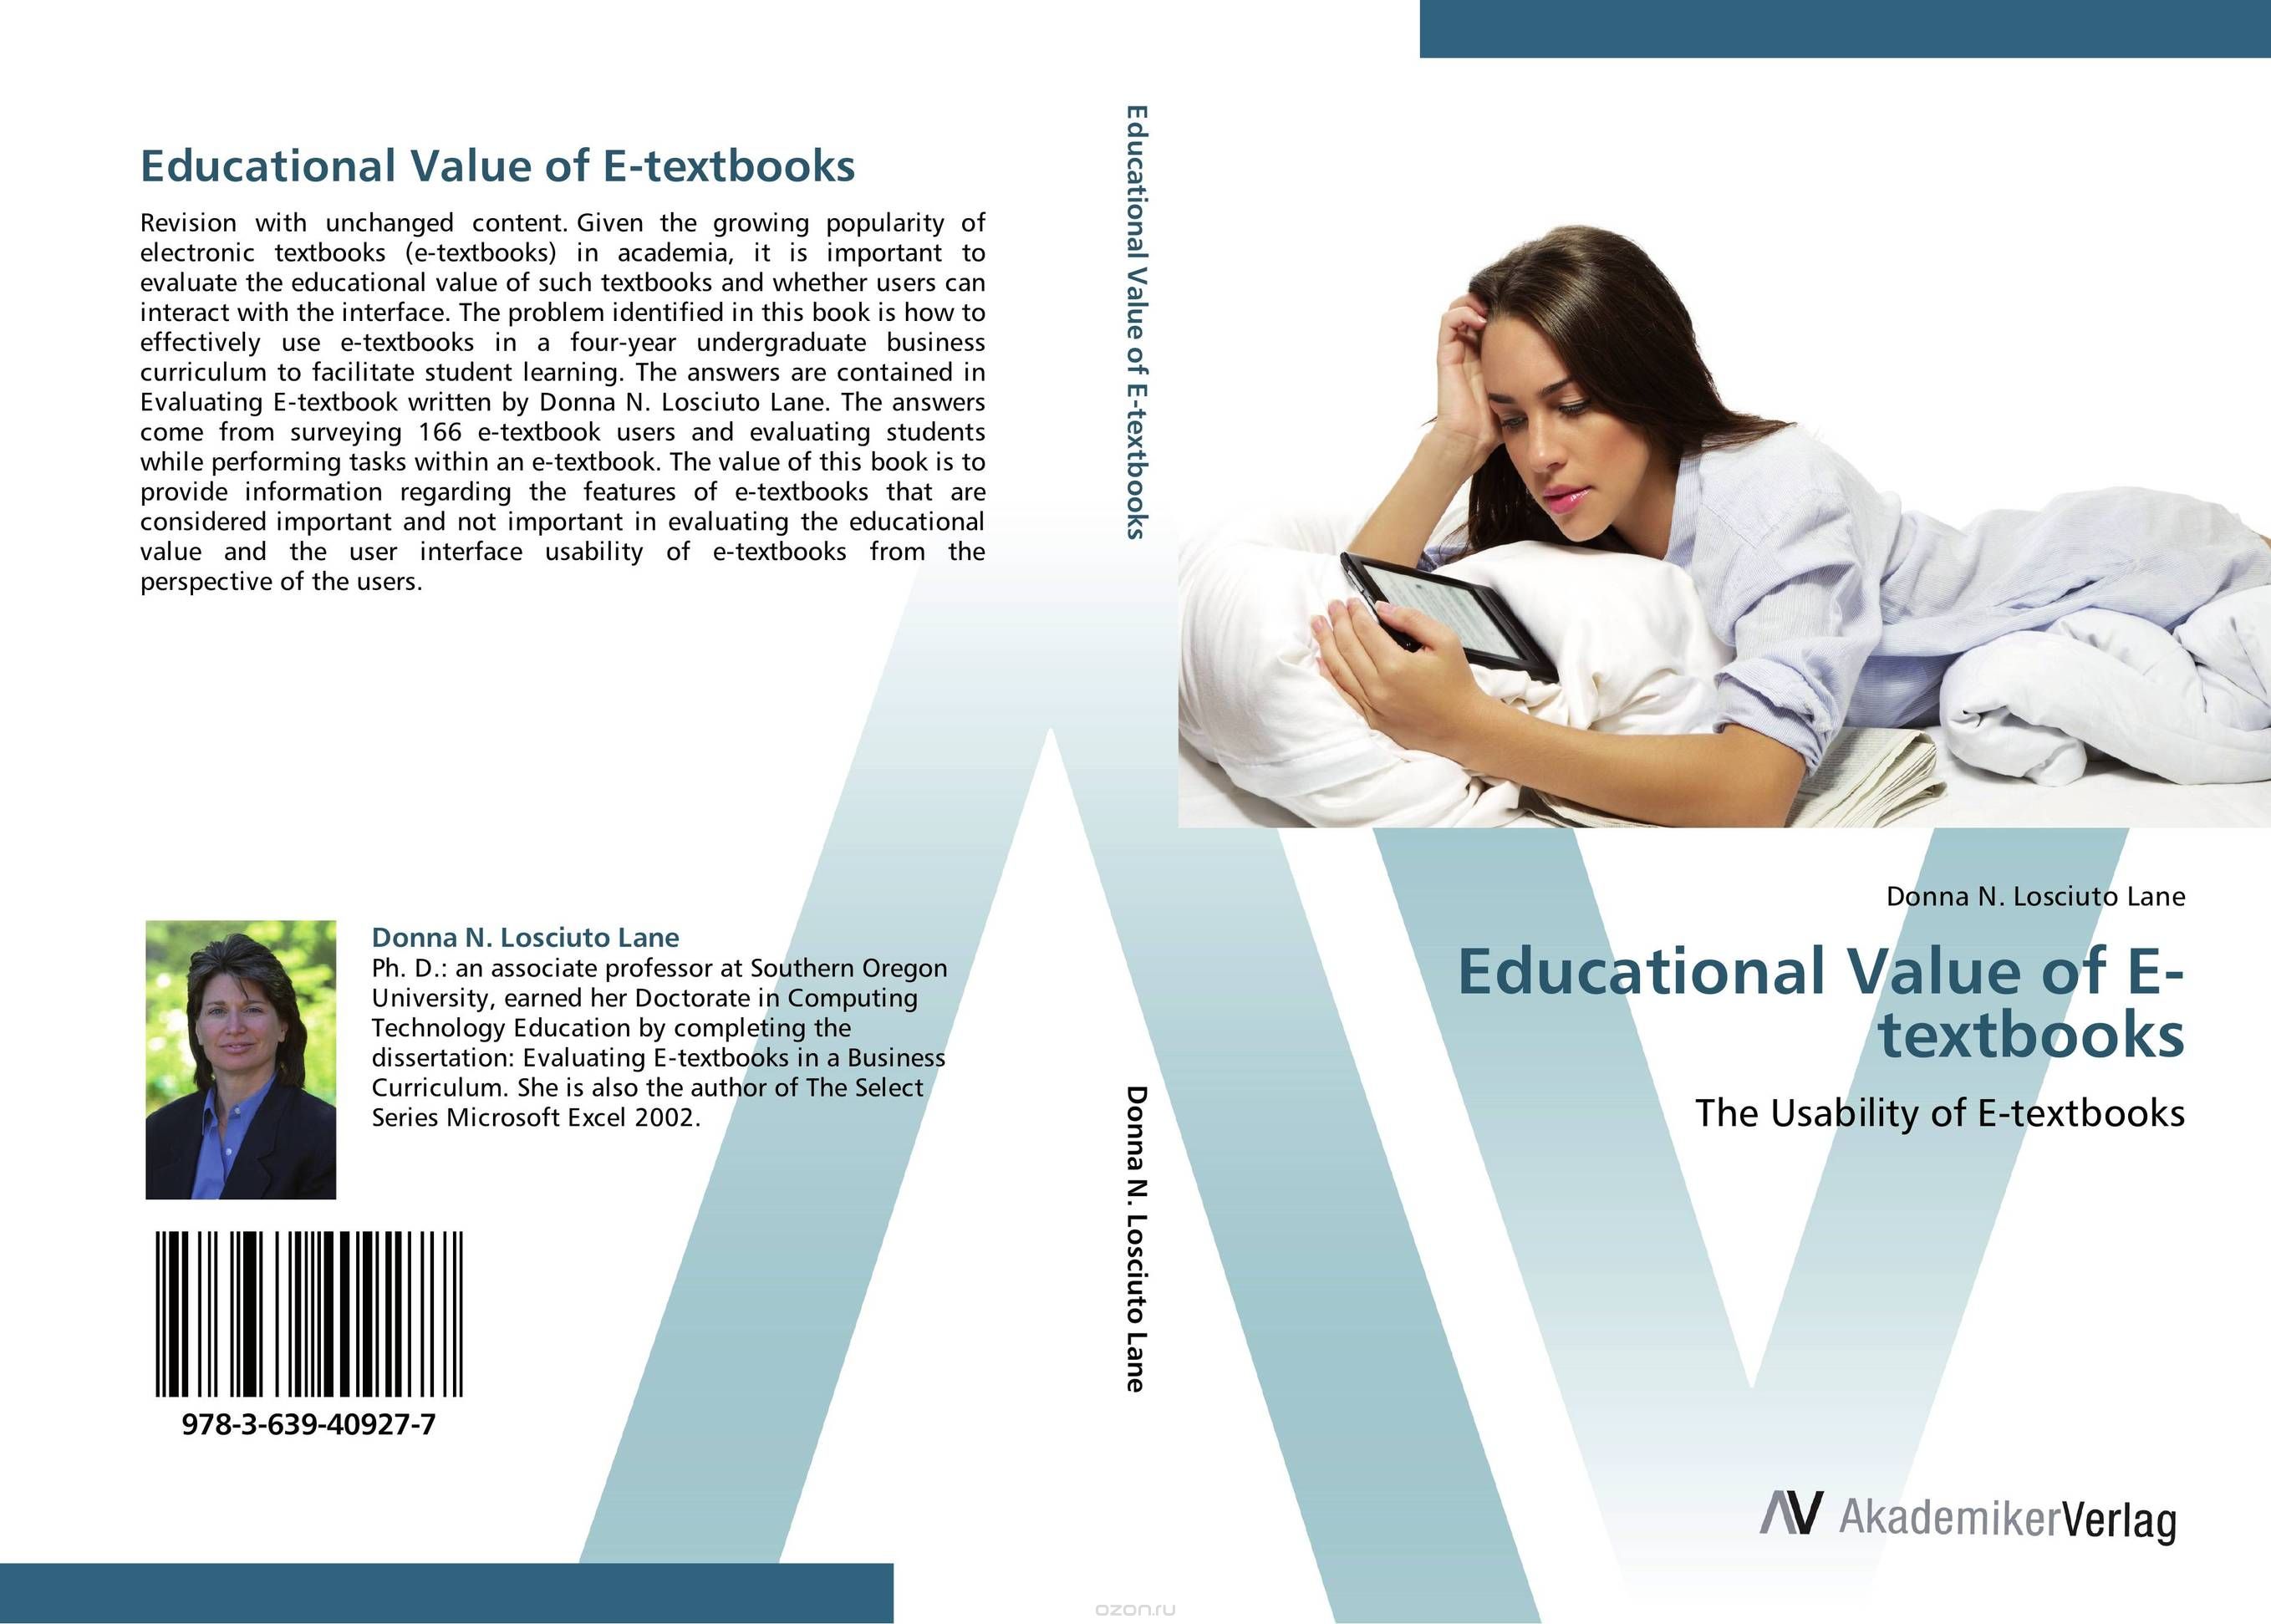 Скачать книгу "Educational Value of E-textbooks"